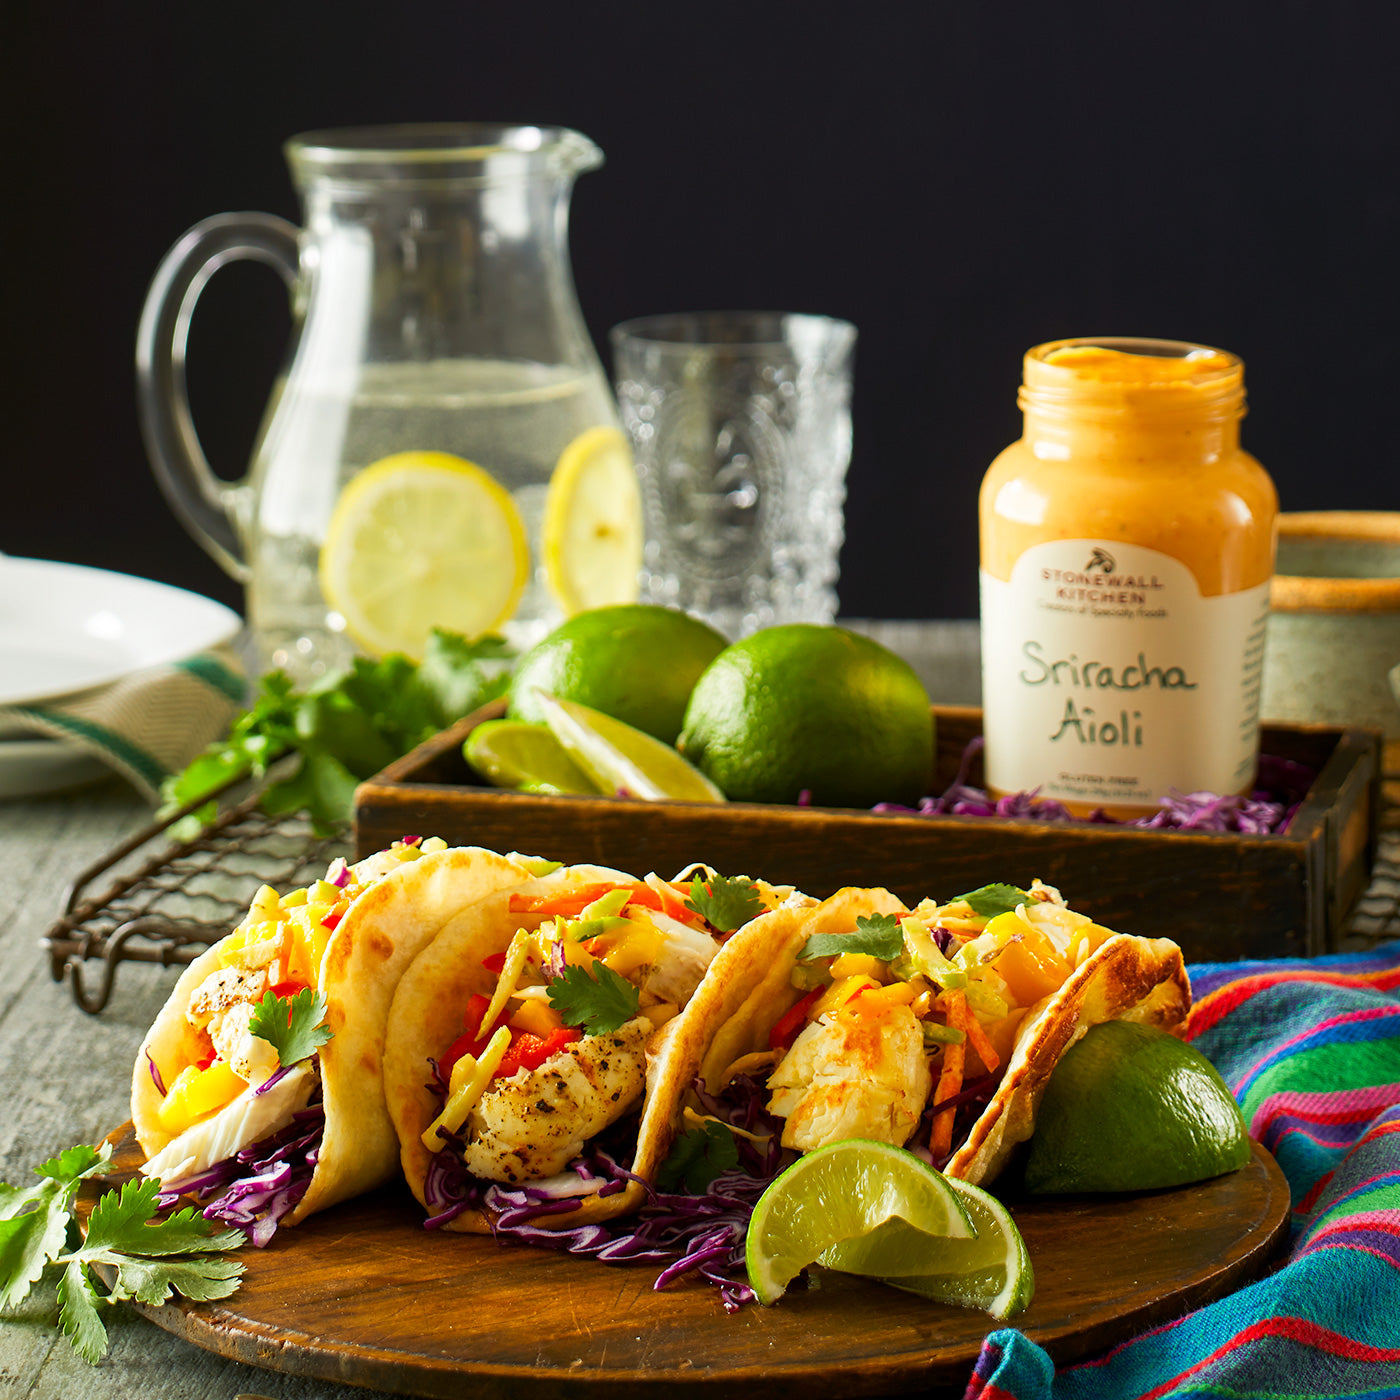 Jar of Stonewall Kitchen Sriracha Aioli with Tacos